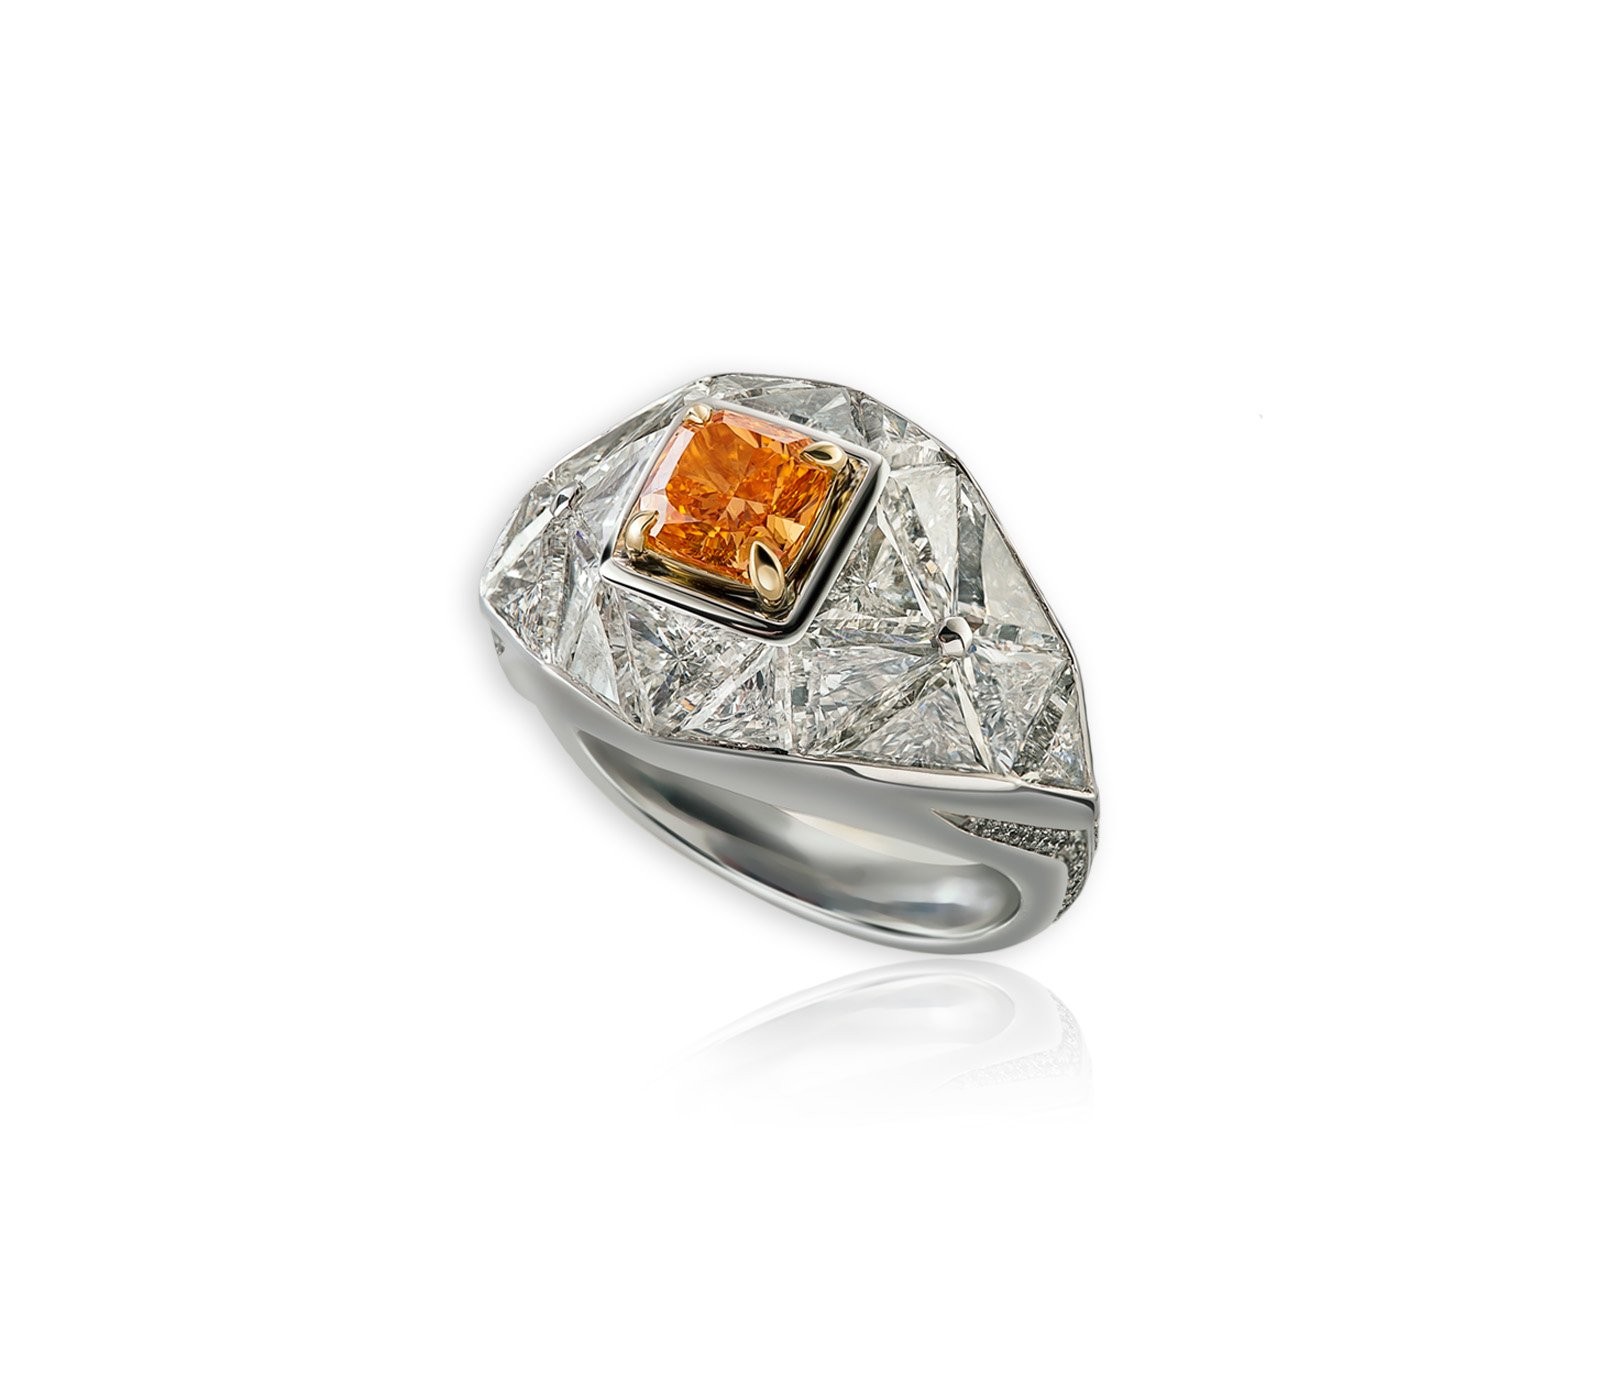 1576394648-fancy-vivid-orange-diamond-ring-1.jpg